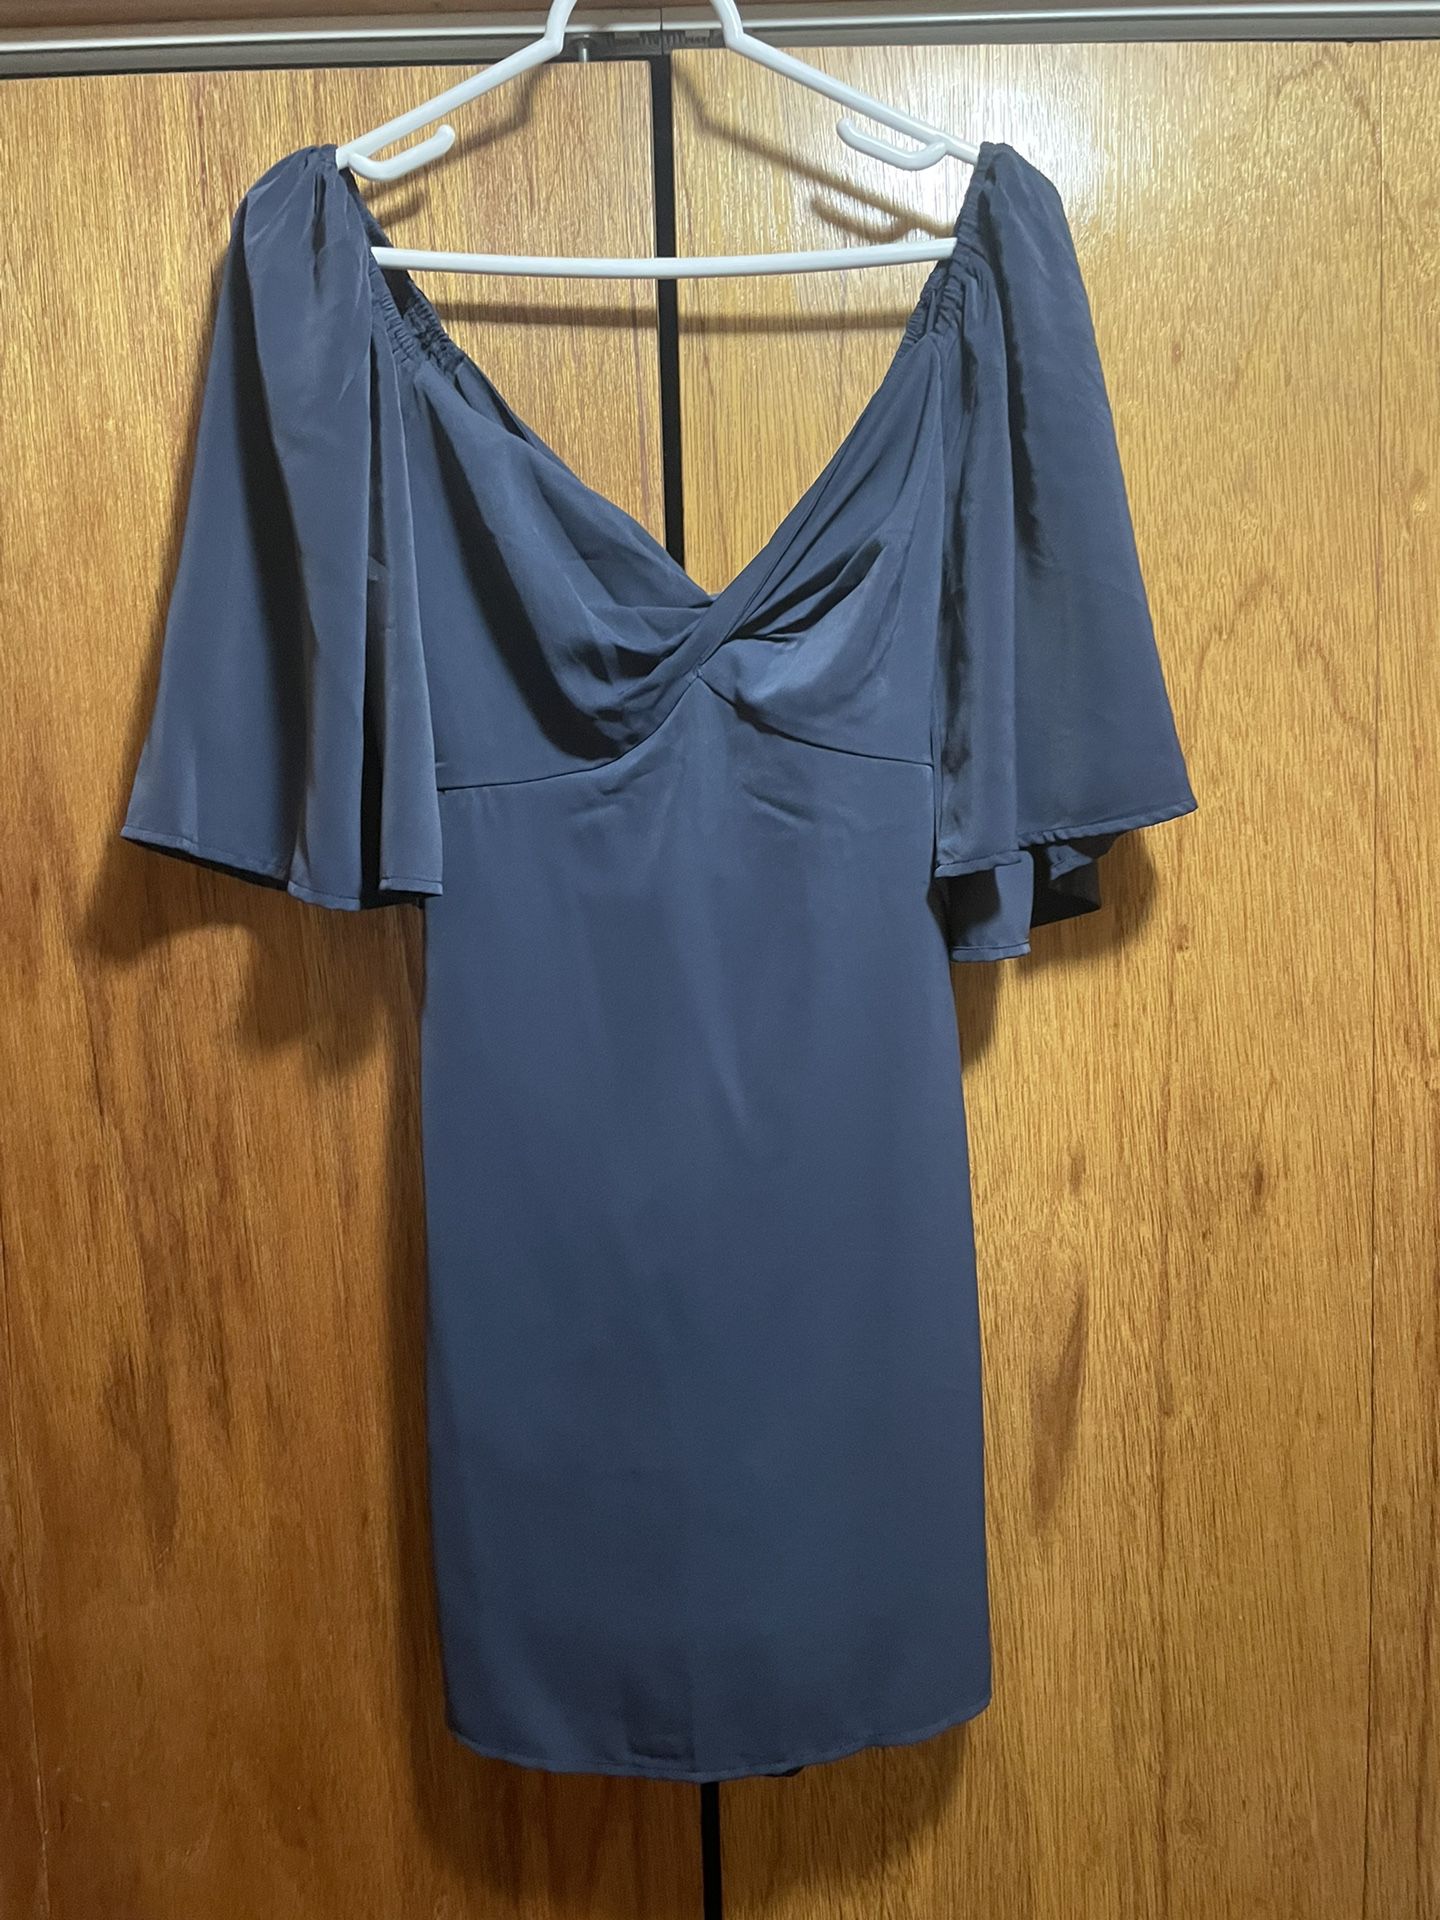 Blue Dress